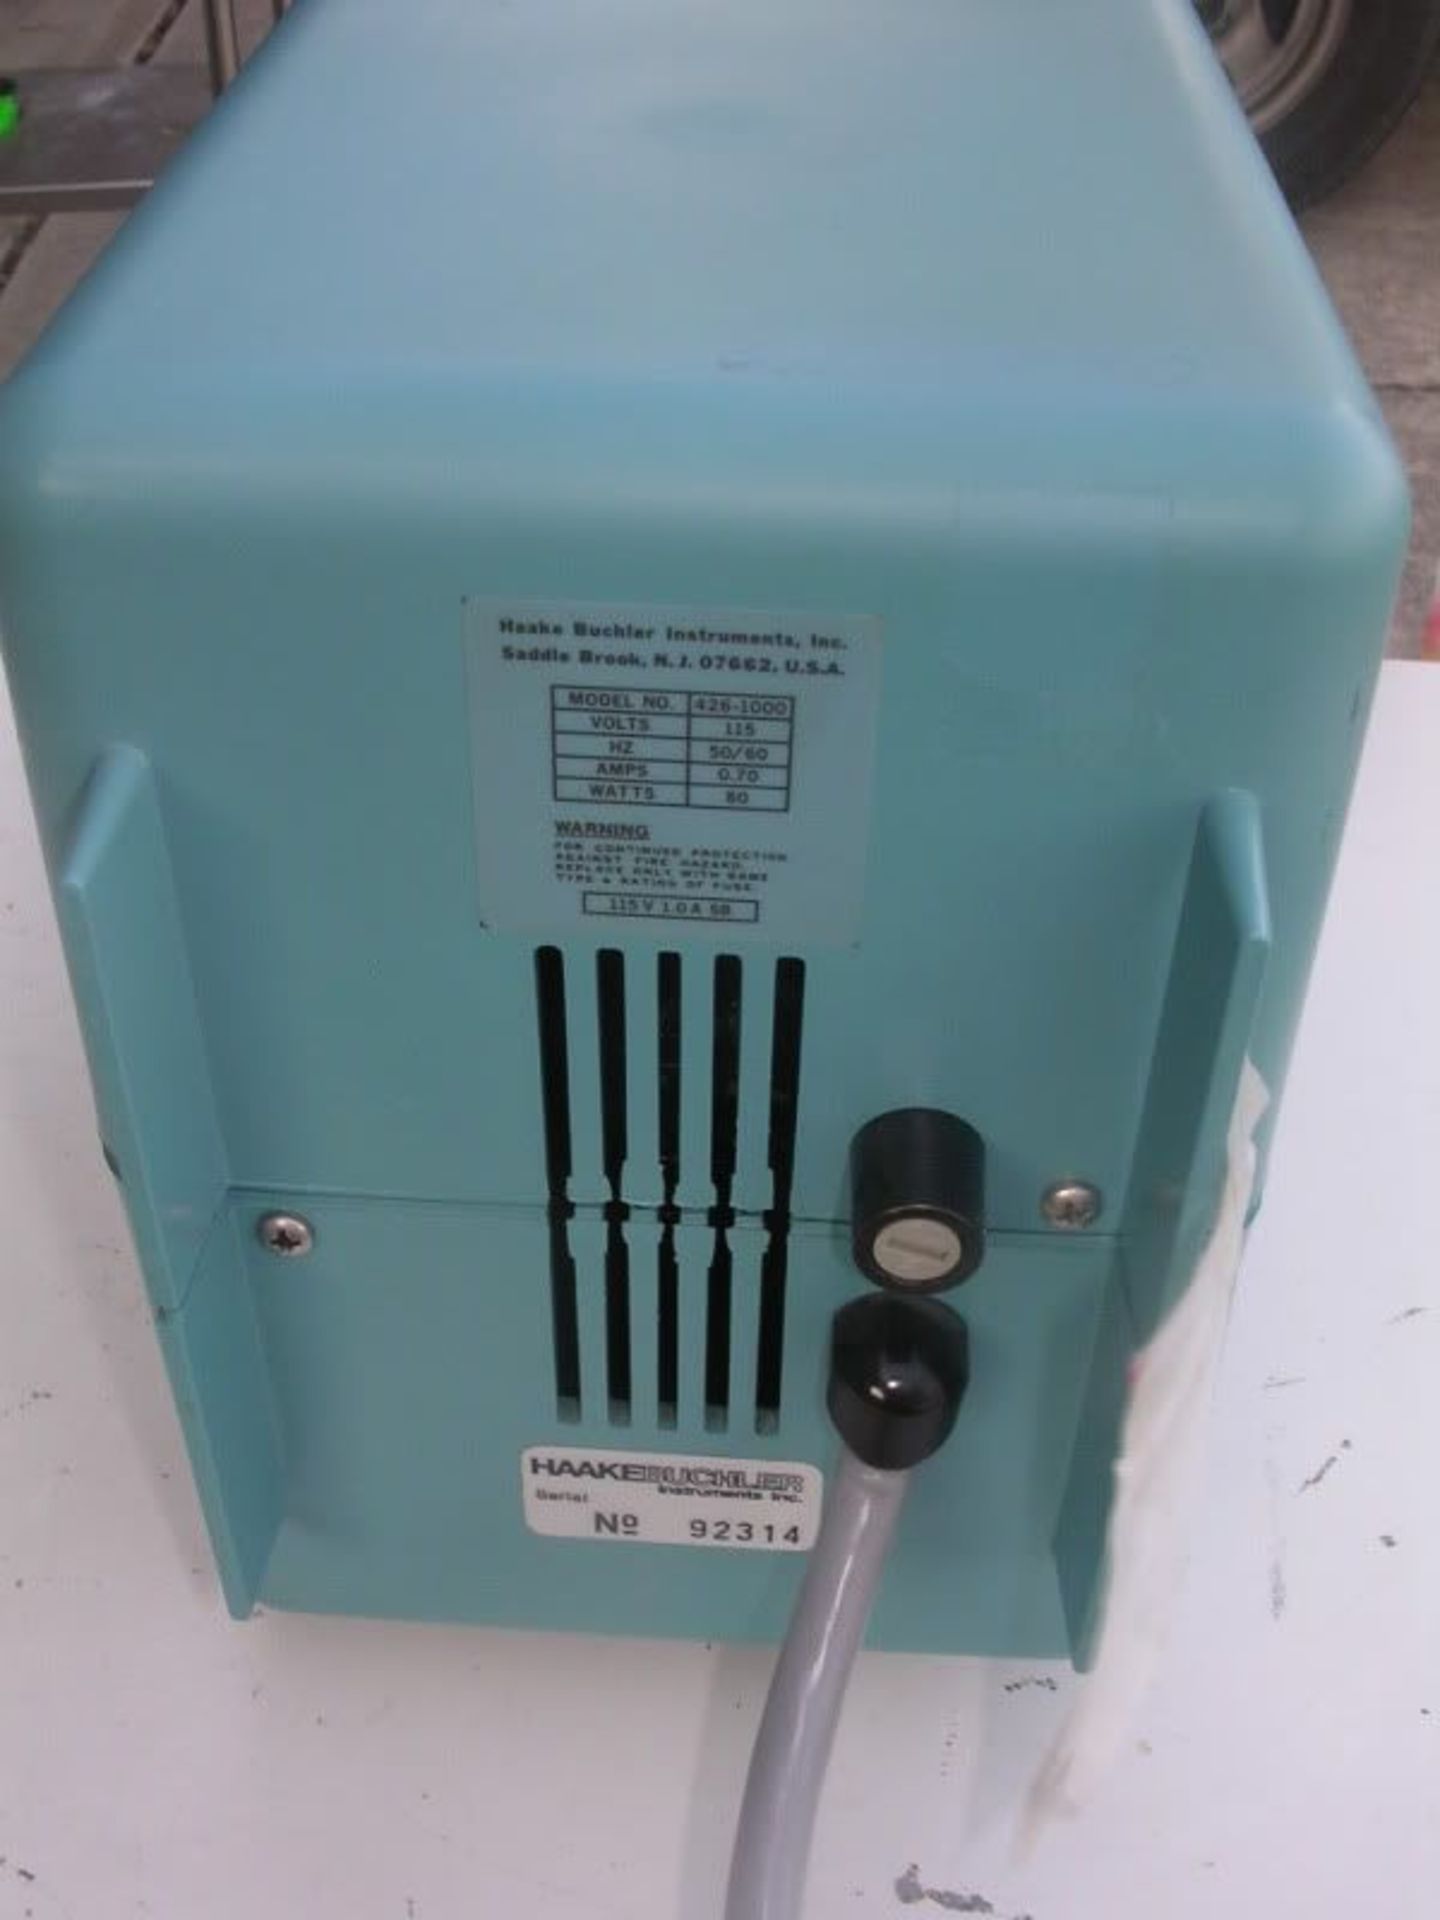 Haake Buchler Polystaltic Pump Model 426-1000 For / Rev, Qty 1, 222227663825 - Image 9 of 12